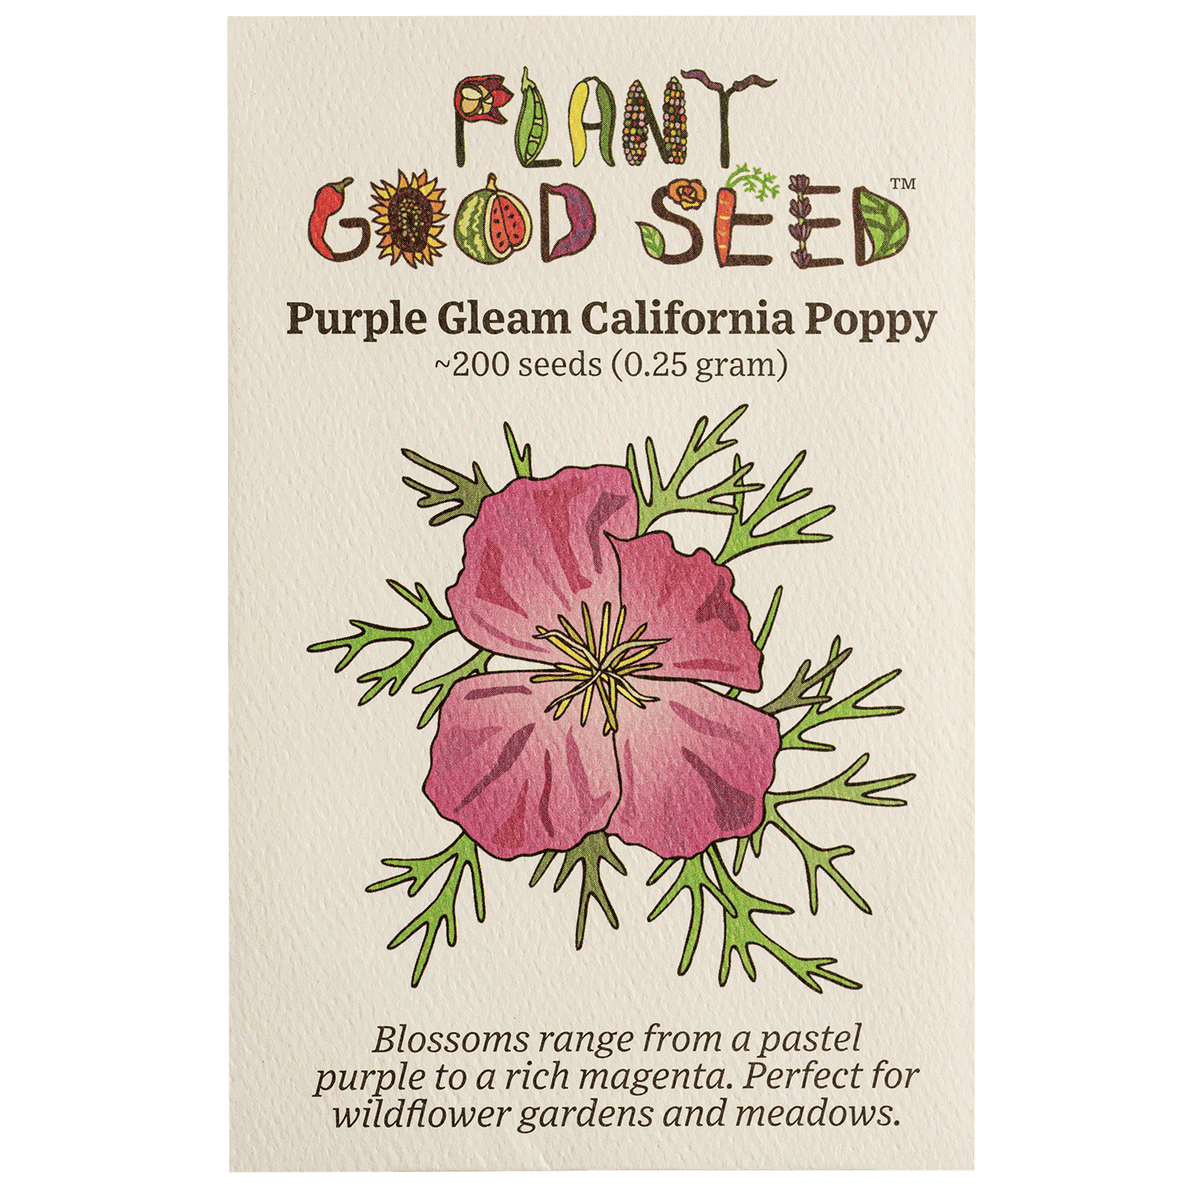 Purple Gleam California Poppy Seeds - The Plant Good Seed Company